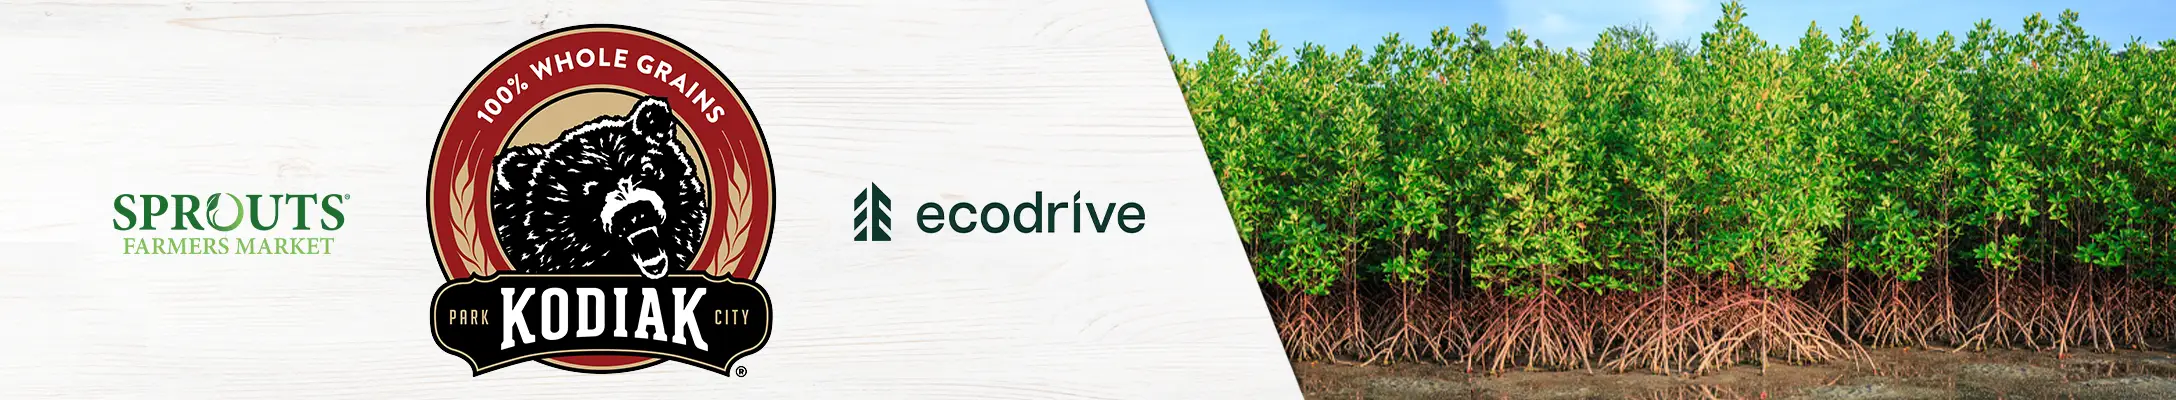 Sprouts Farmers Market logo, Kodiak Cakes logo, and eco drive logo next to a photo of mangrove trees